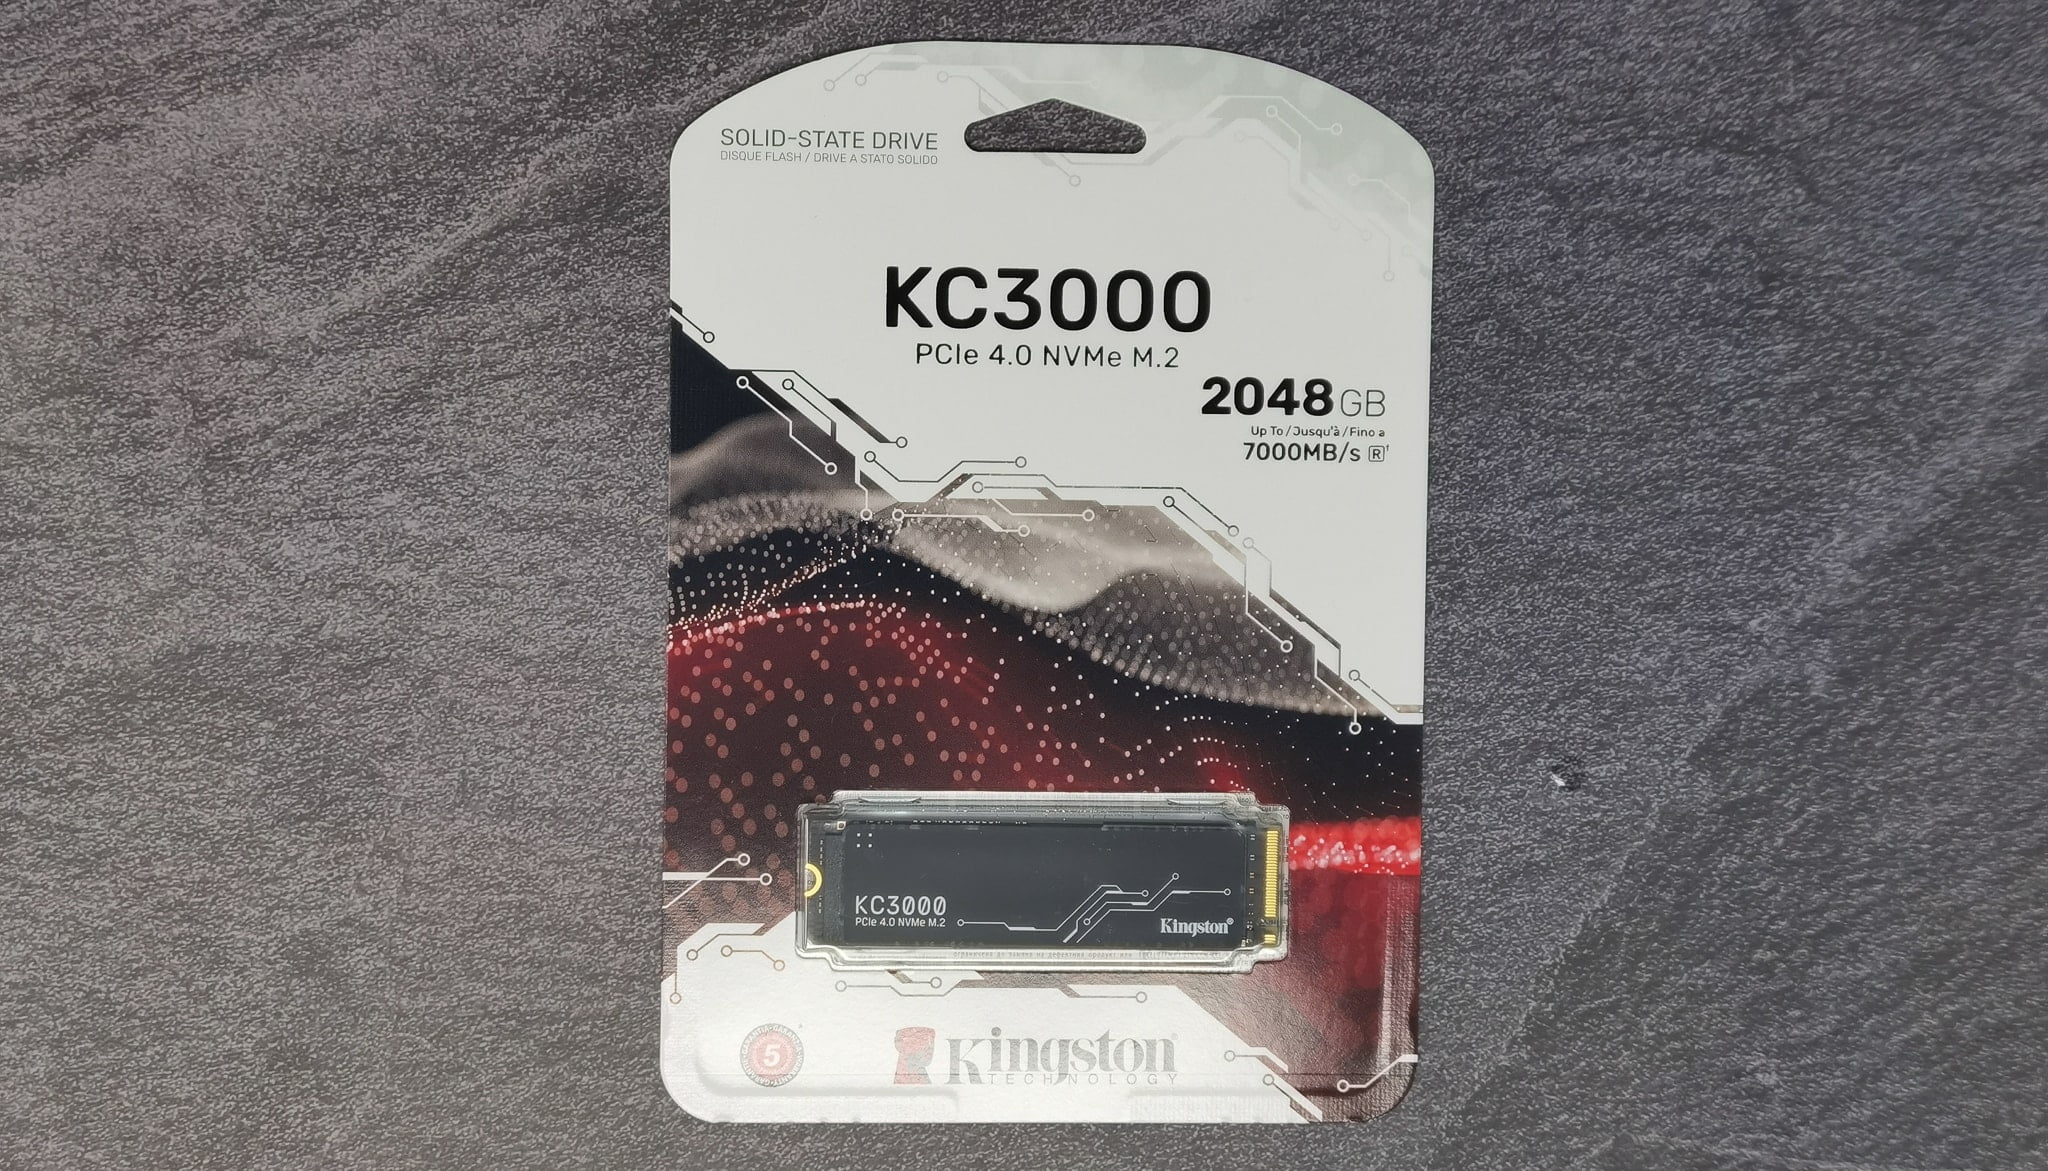 Kingston KC3000 PCIe 4.0 NVMe Review – Massive speed improvements vs PCIe 3.0 KC2500